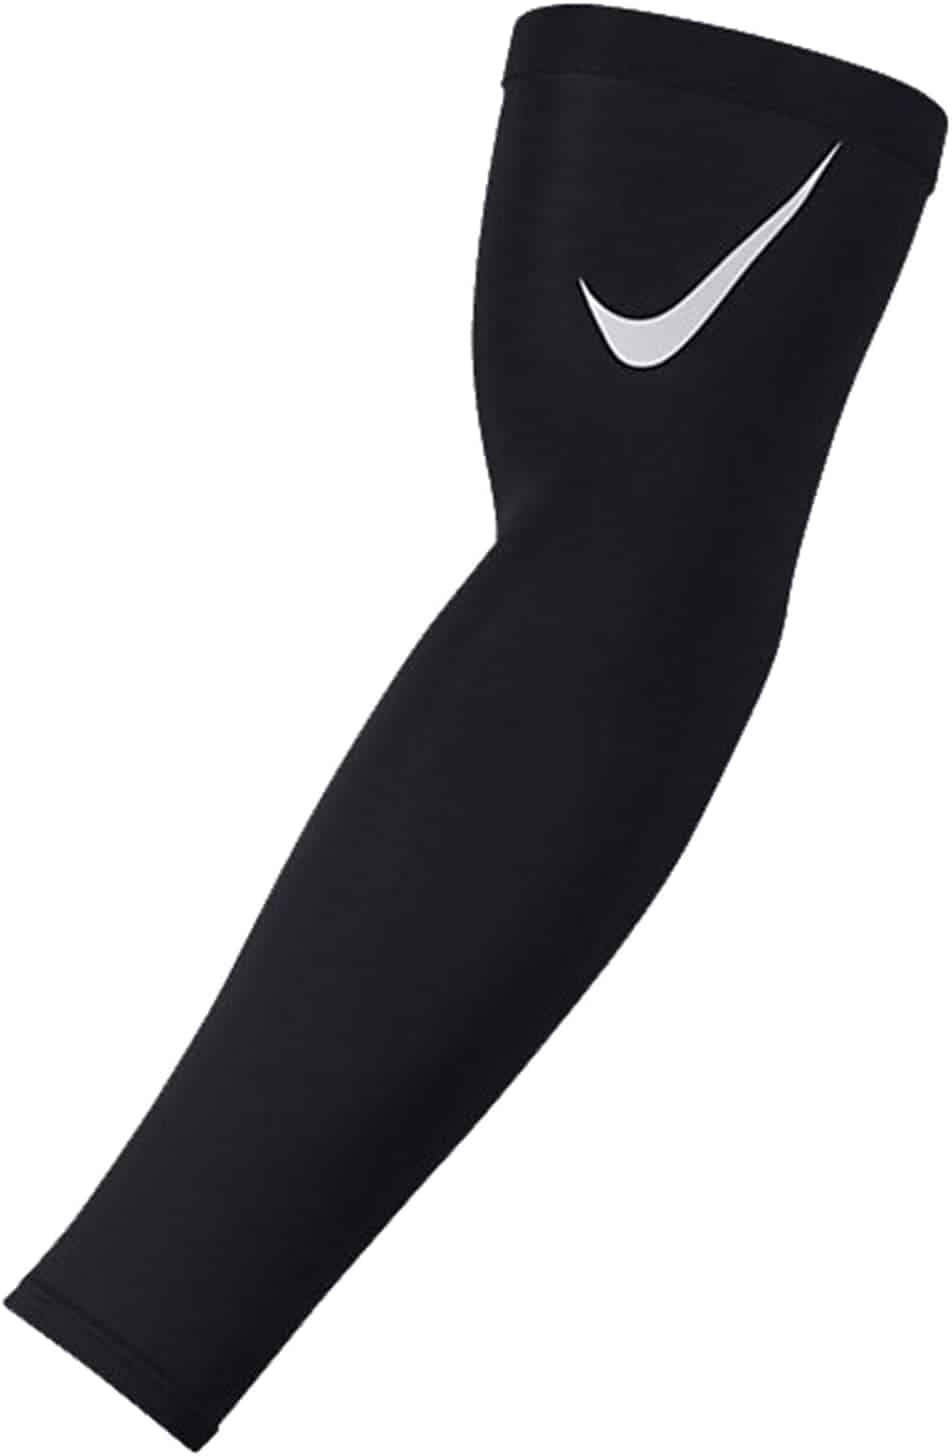 Beste arm sleeve zonder padding- Nike Pro Adult Dri-FIT 3.0 Arm Sleeves